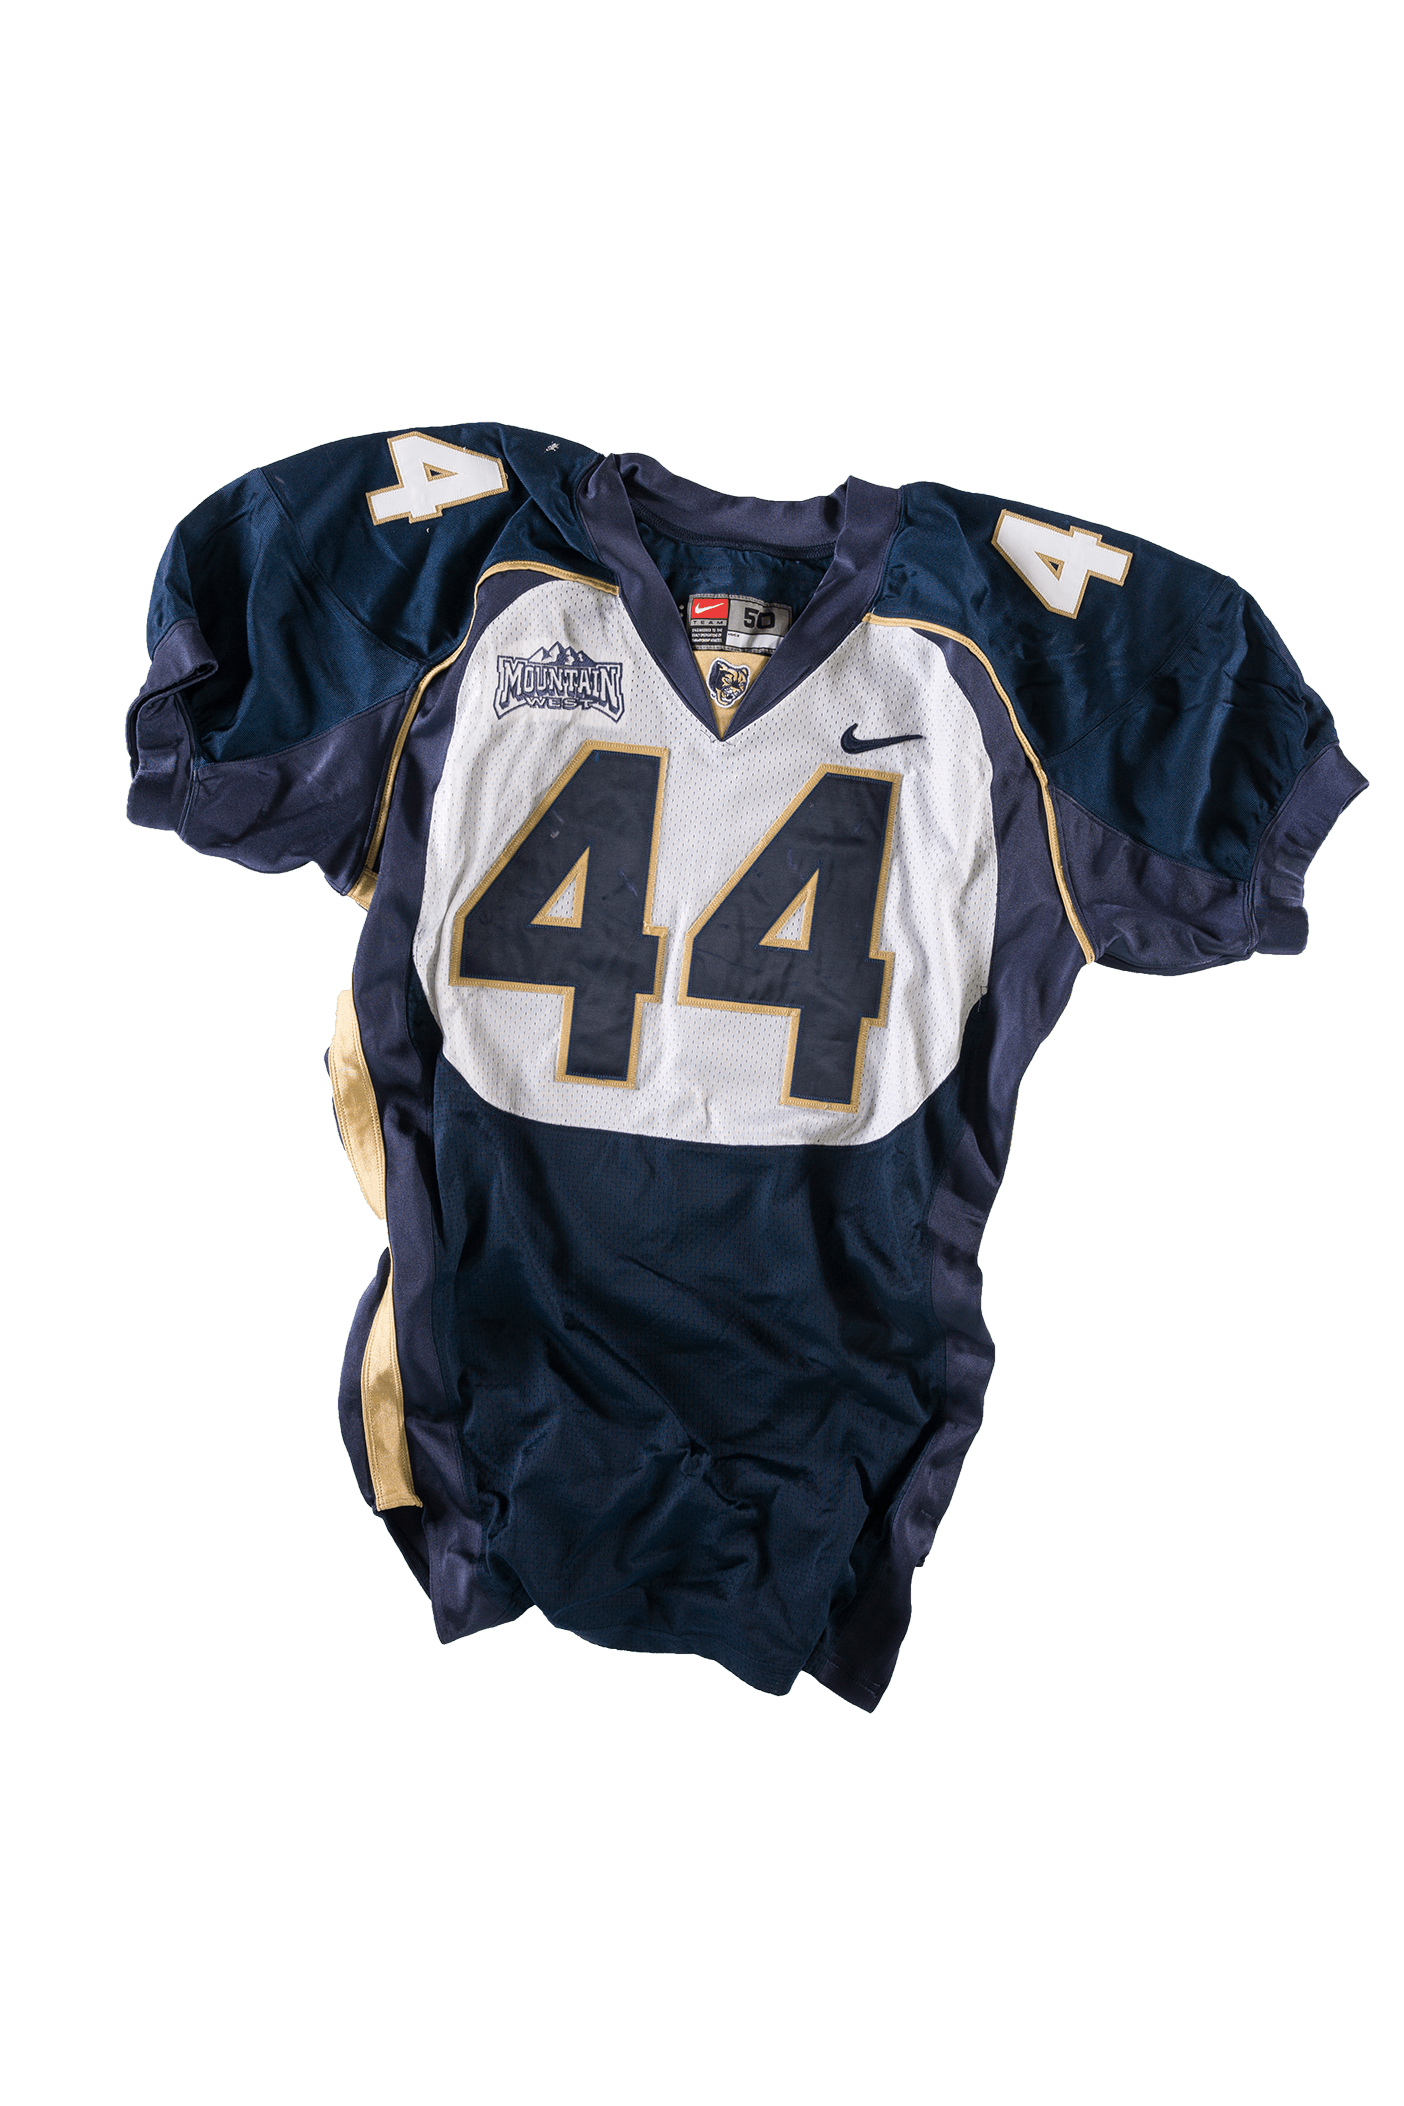 The 1999 "bib" jersey